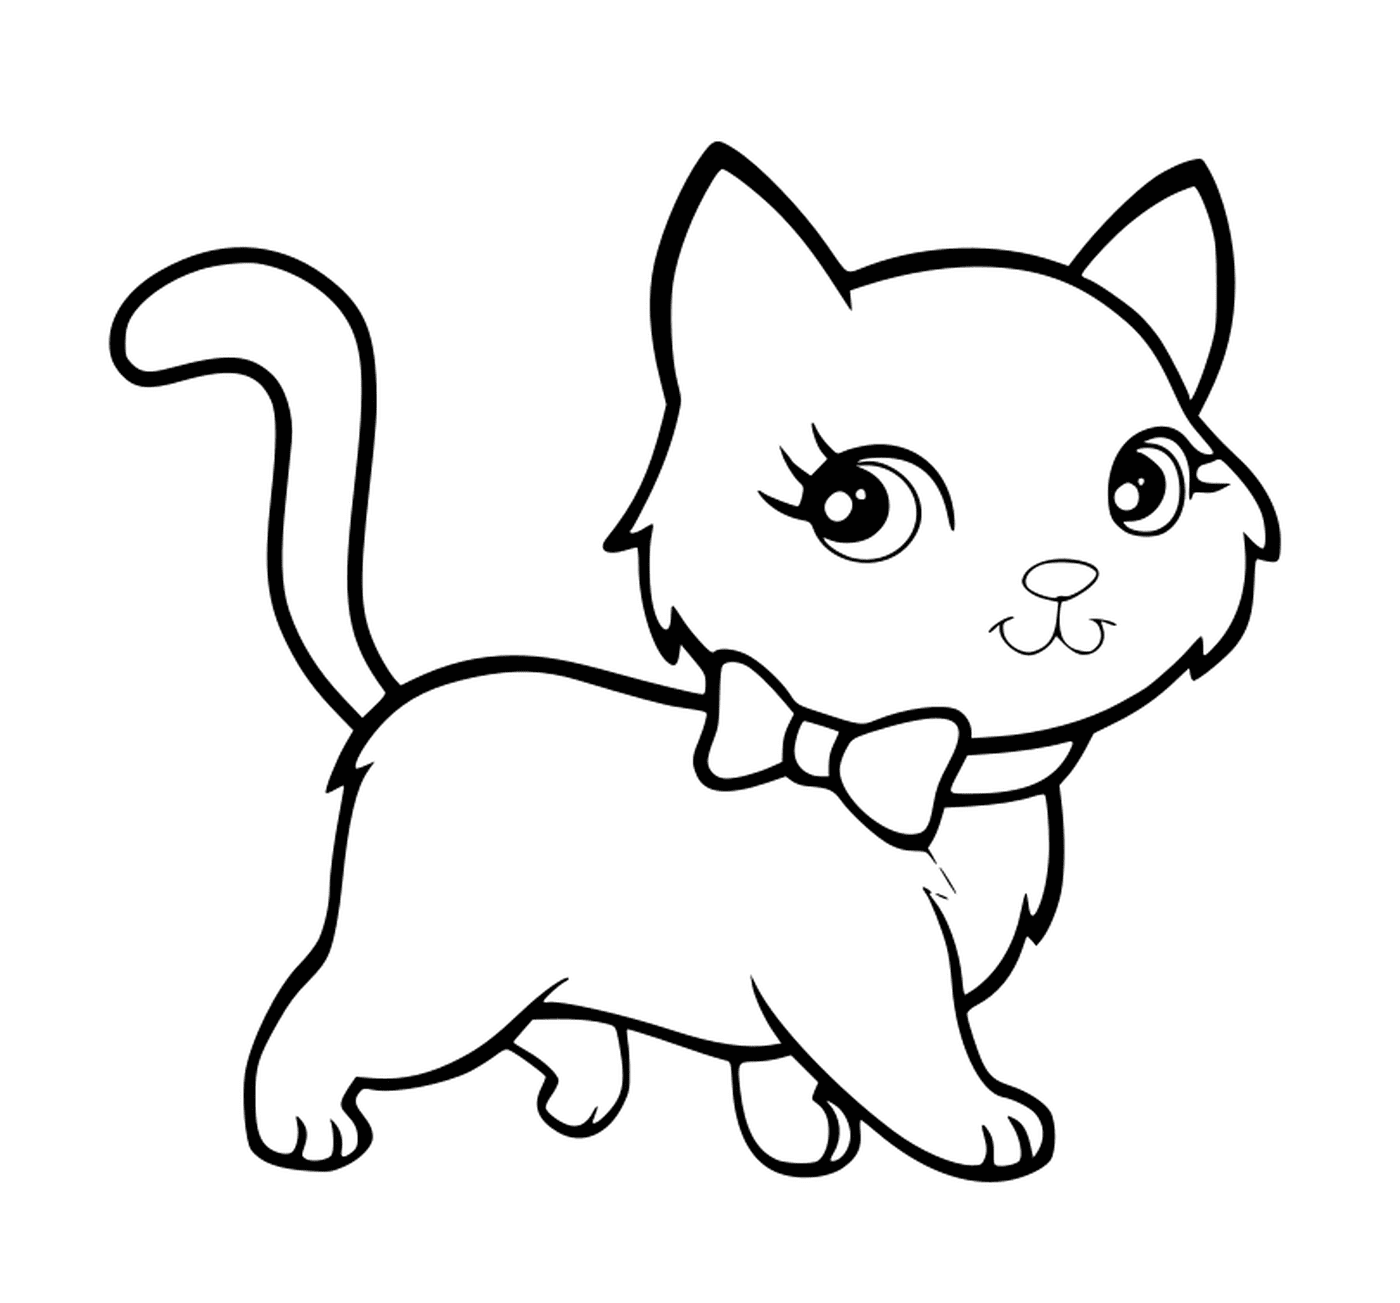  A super cute kawaii kitten that works with elegance 